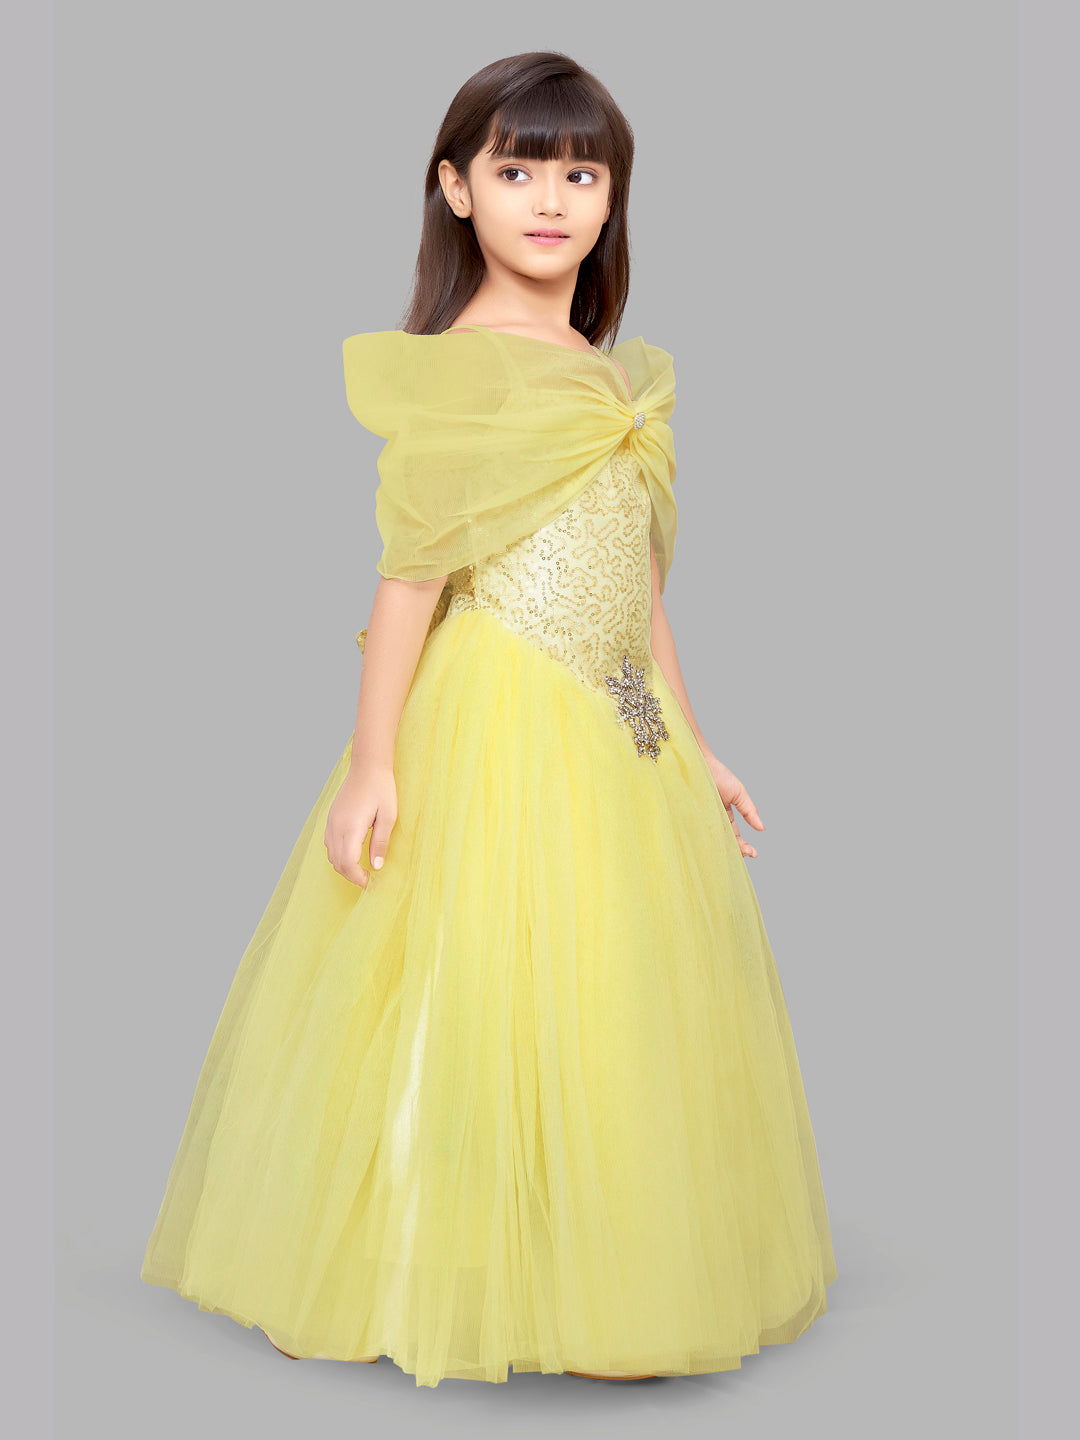 Princess Melody Series: Yellow Dress #2 by MermaidMelodyEdits on DeviantArt